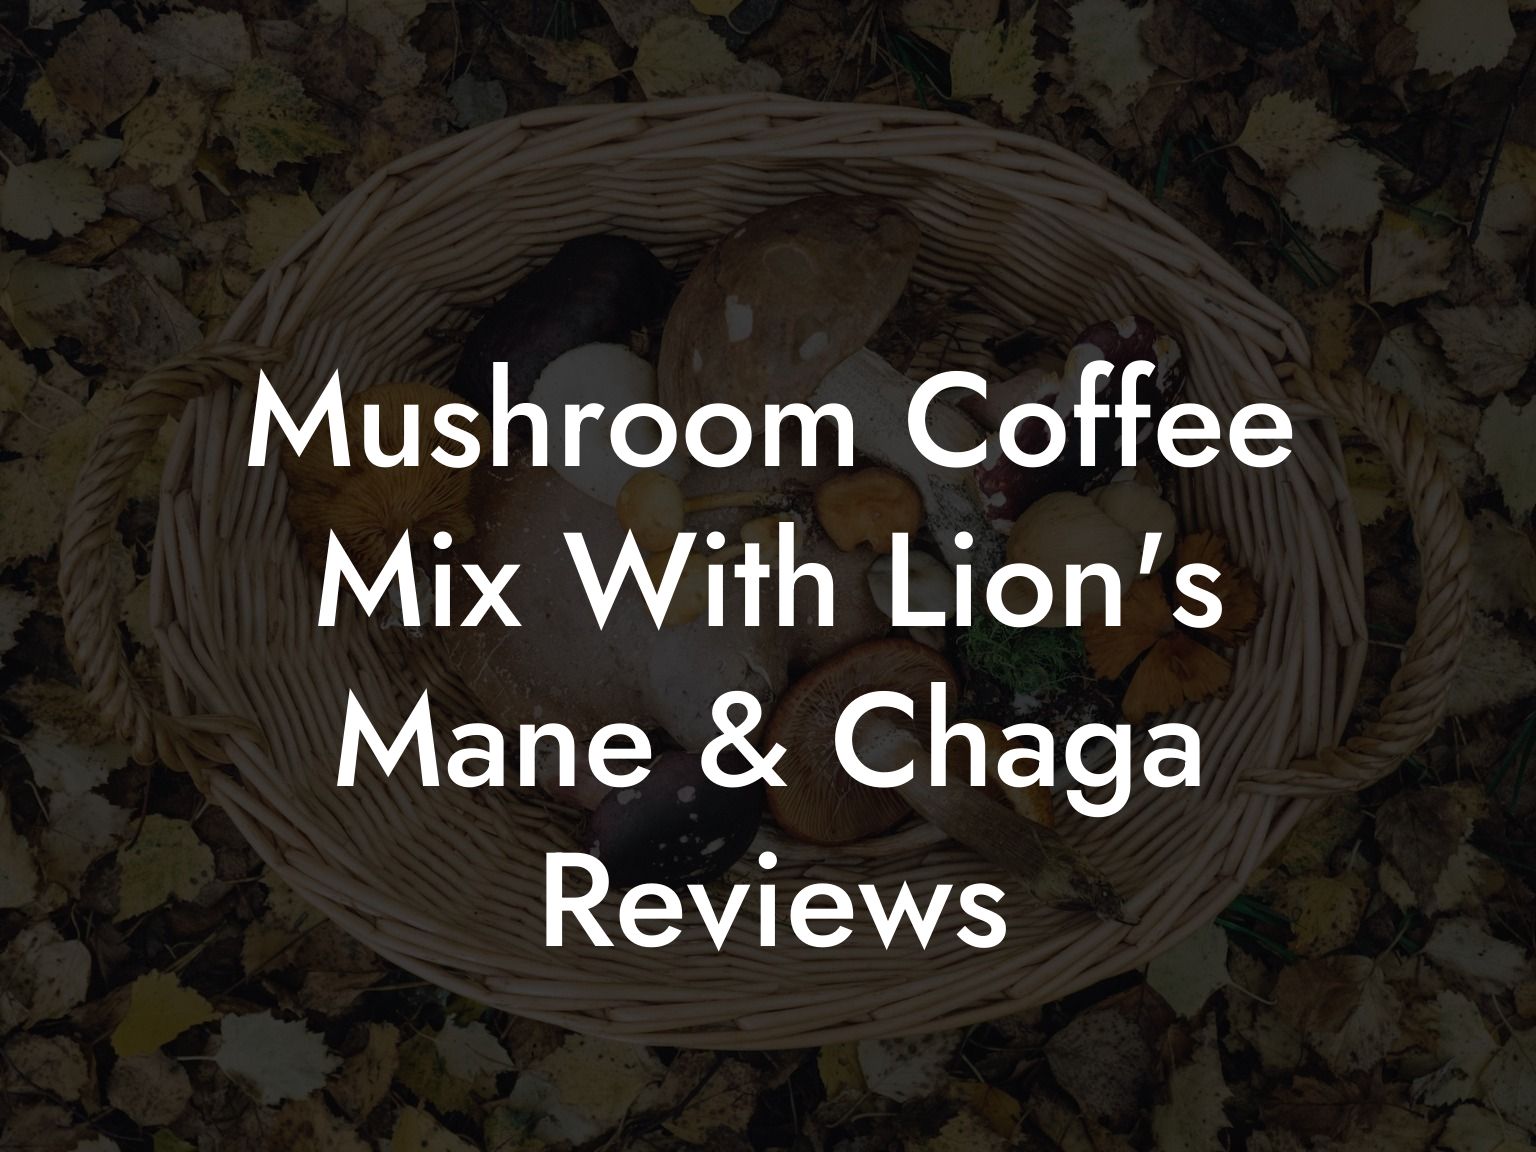 Mushroom Coffee Mix With Lion's Mane & Chaga Reviews